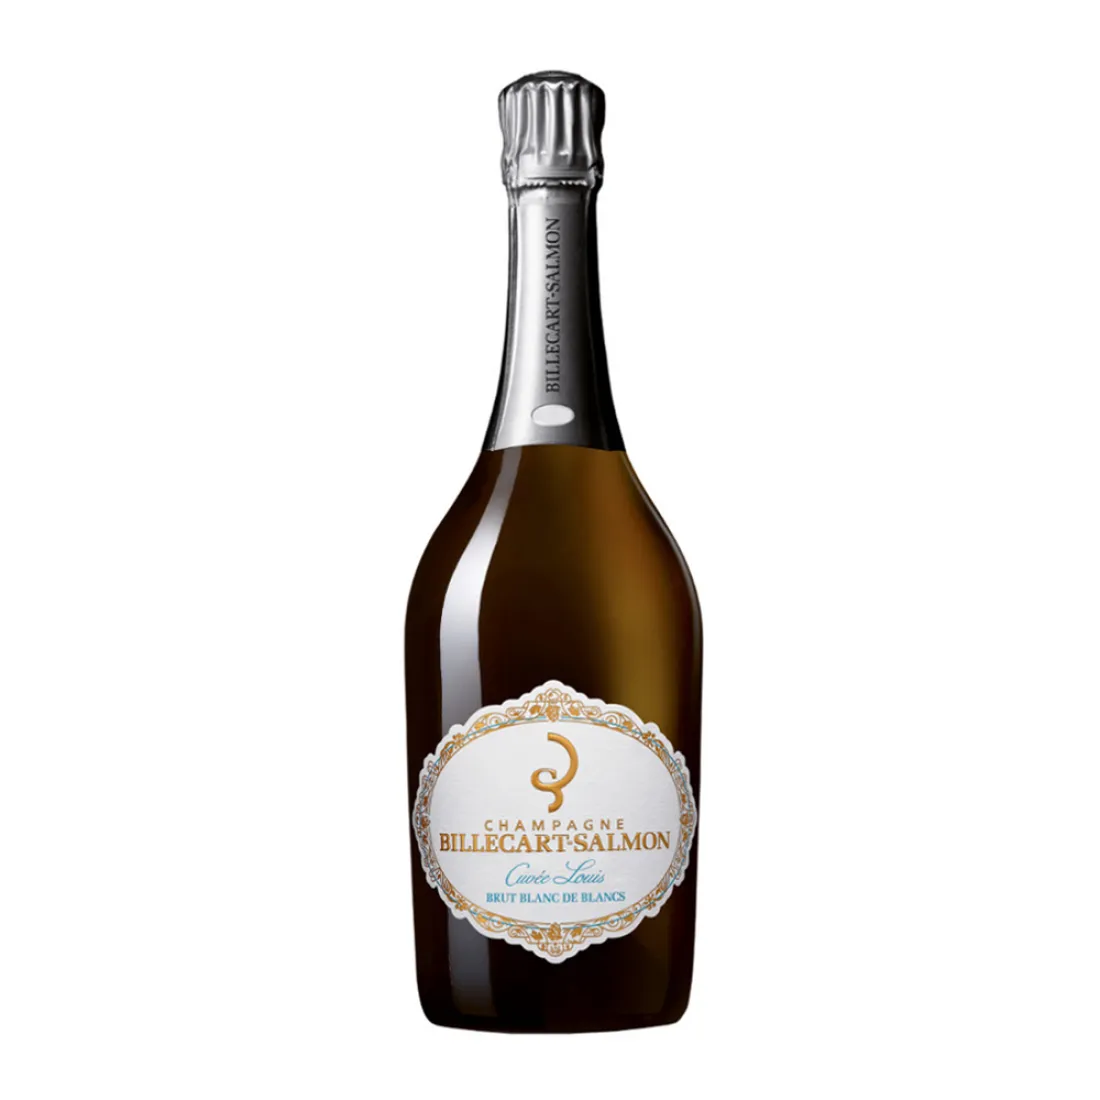 https://www.wineandchampagnegifts.com/image/cache/catalog/champagne/Bill-Cart-Salmon-louis-salmon-2008-1100x1100.webp